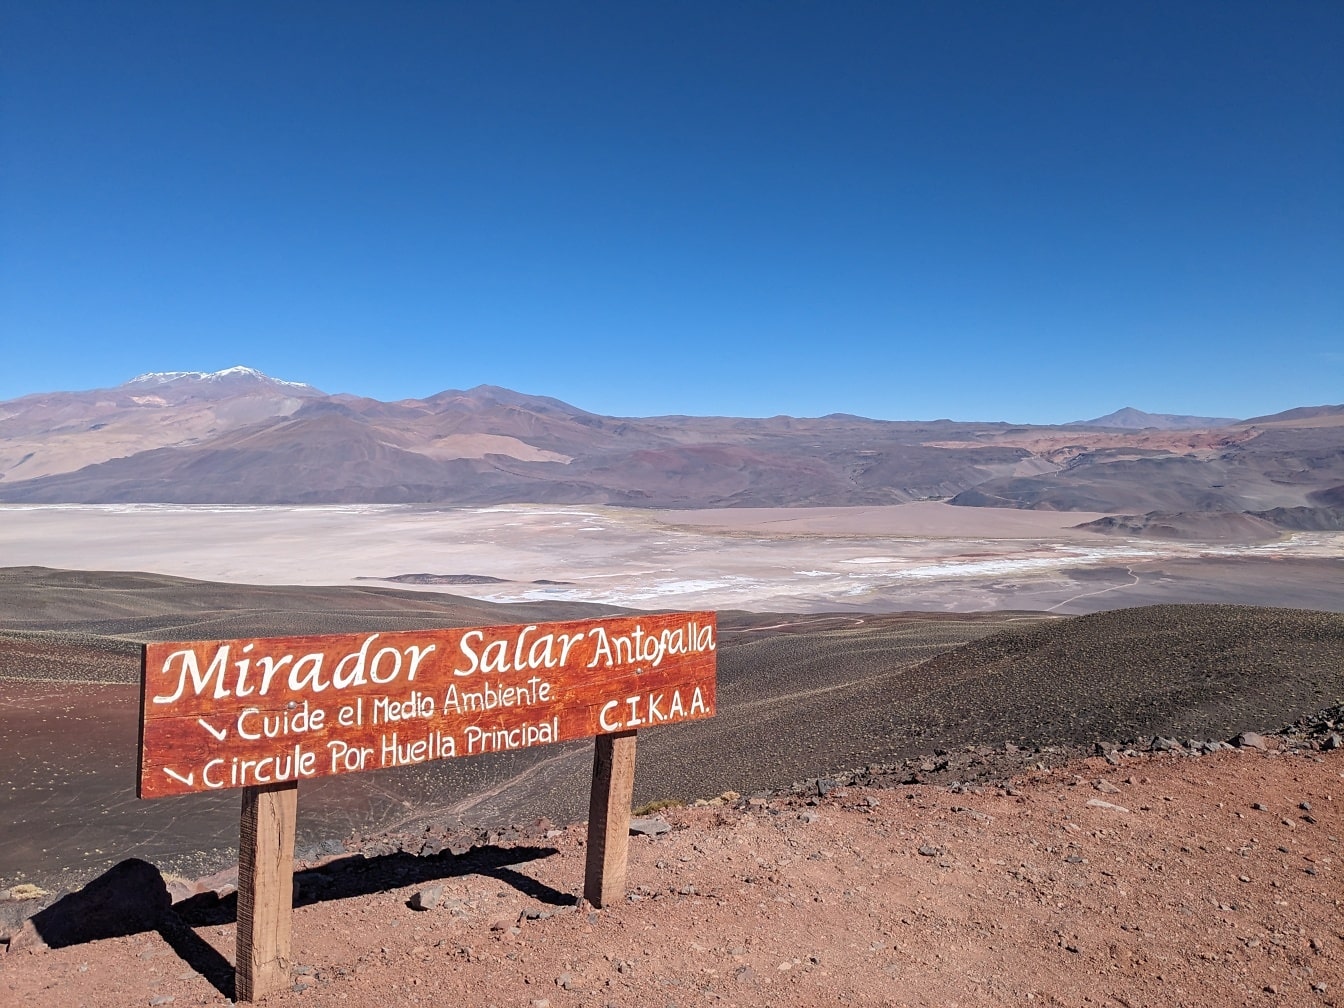 Segno su una collina nel deserto del Salar de Antofalla di Mirador in Argentina